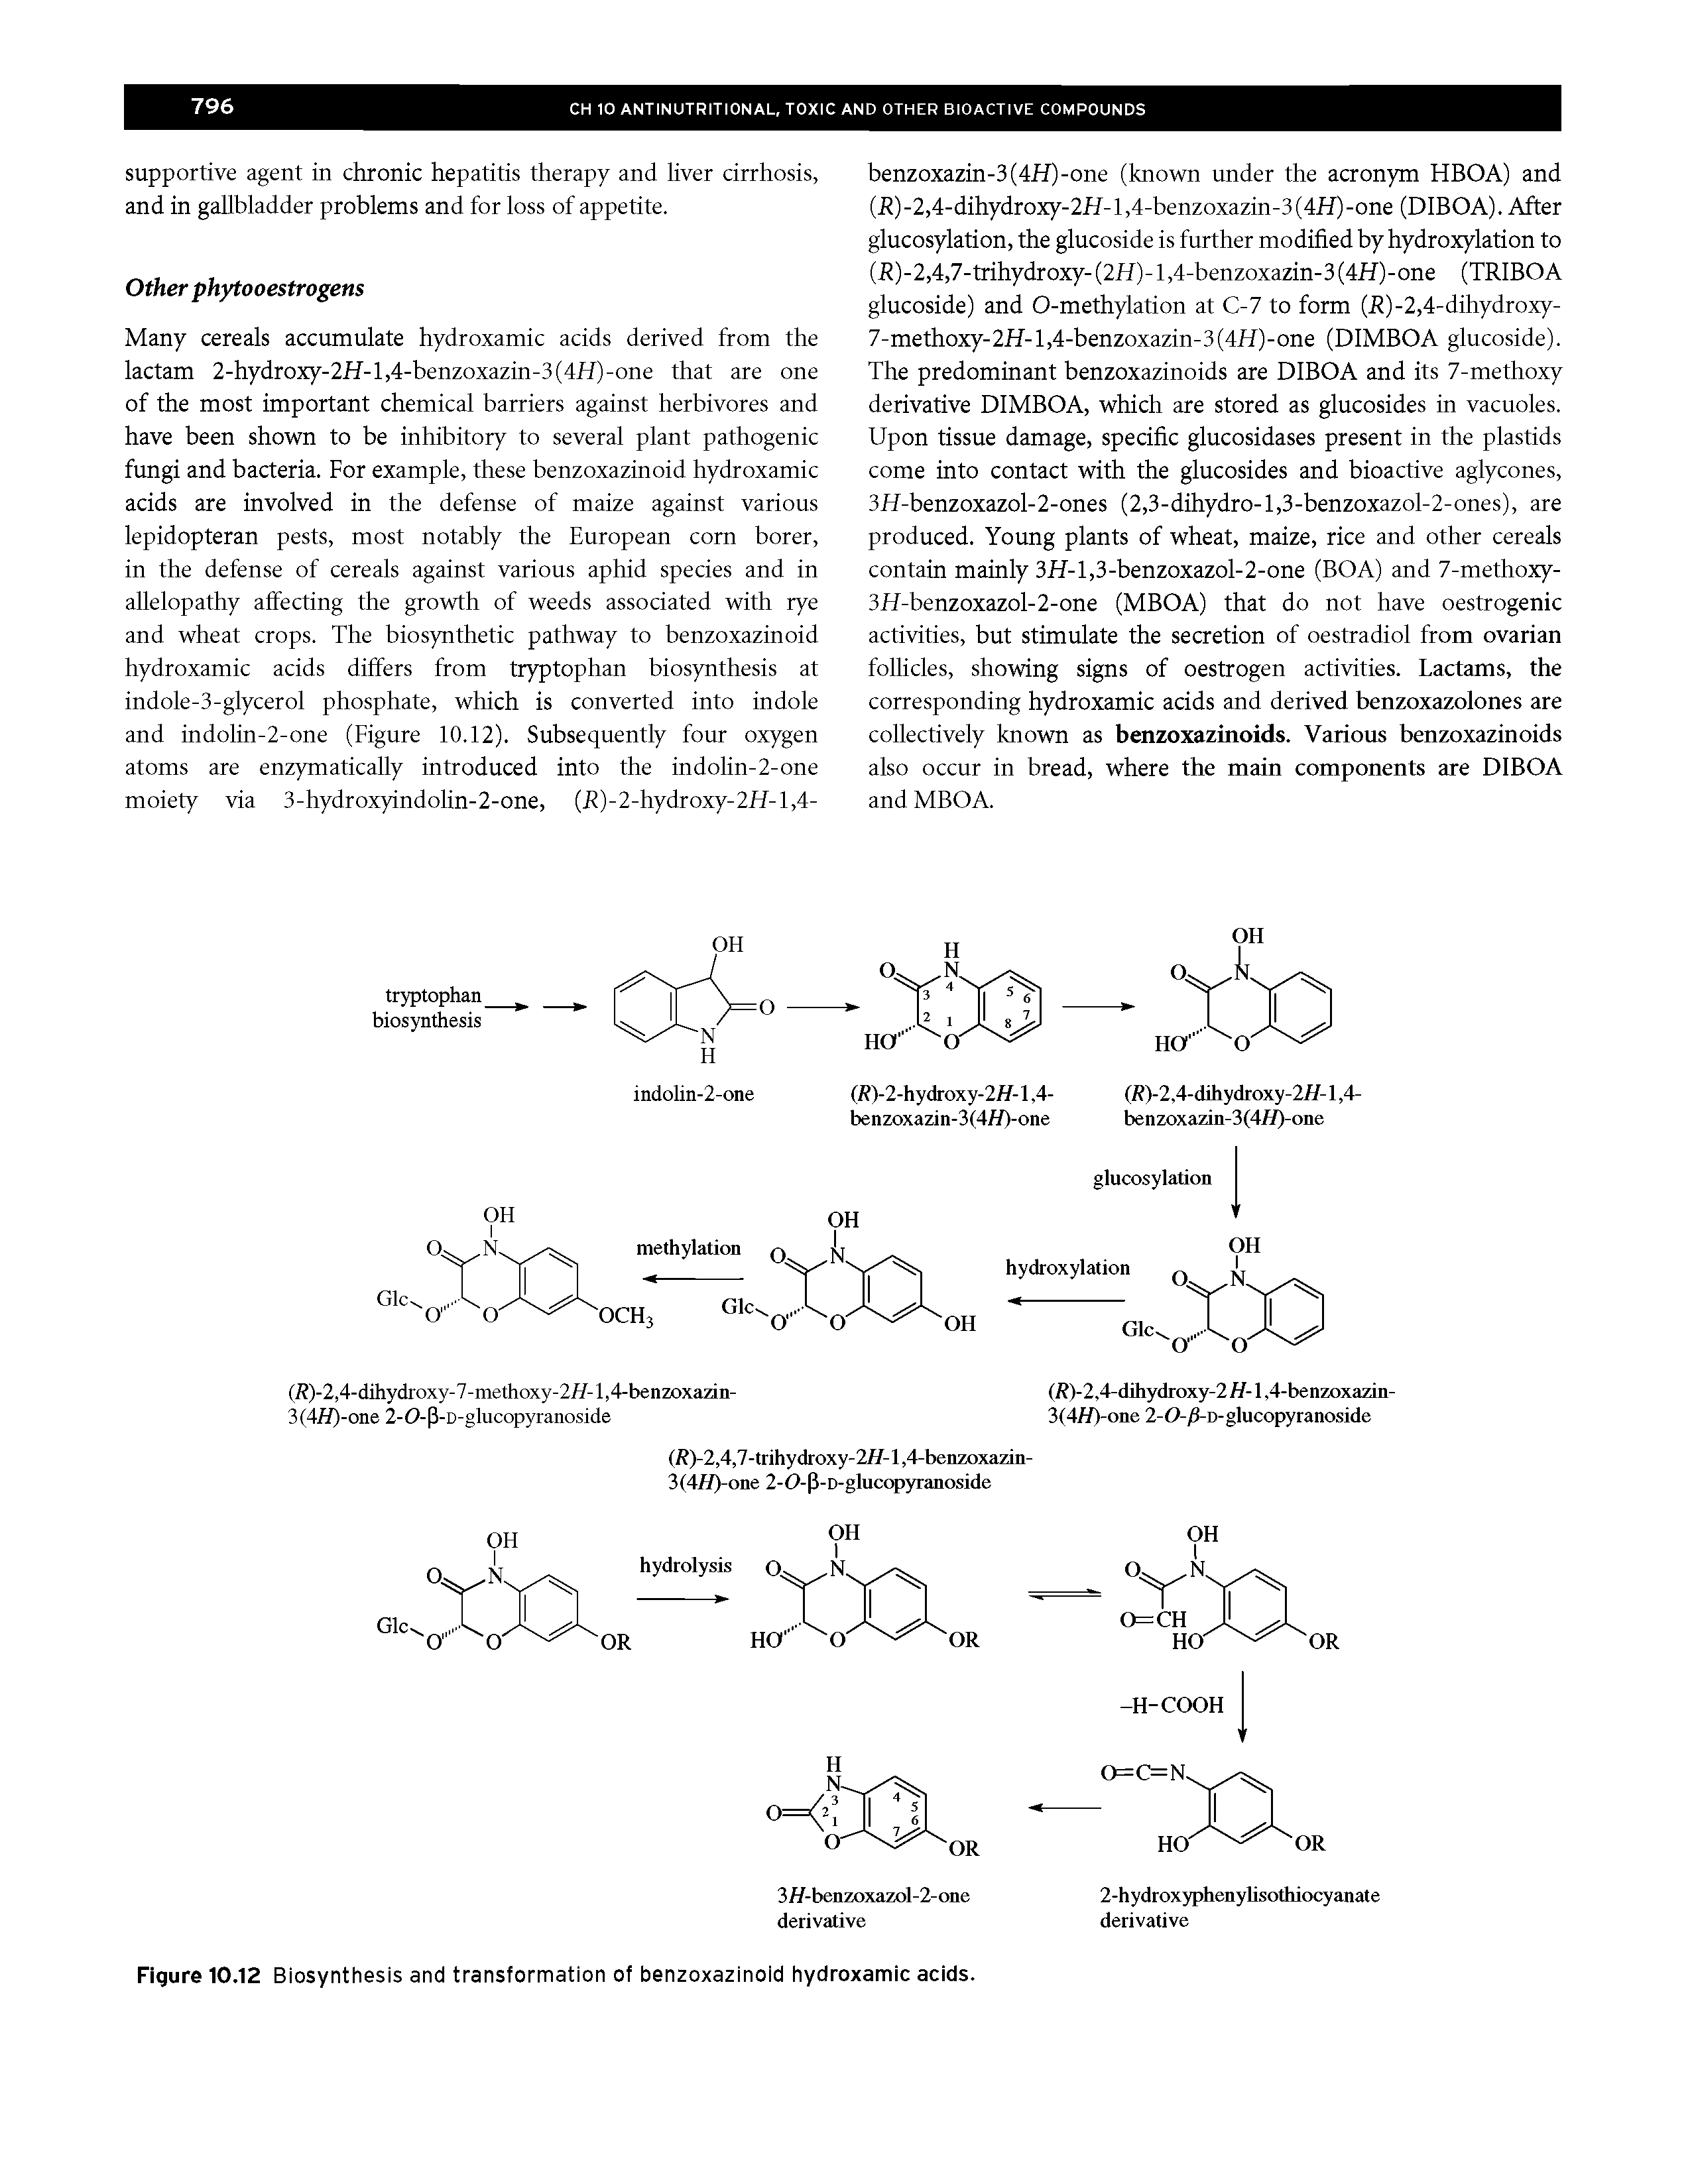 Figure 10.12 Biosynthesis and transformation of benzoxazinoid hydroxamic acids.